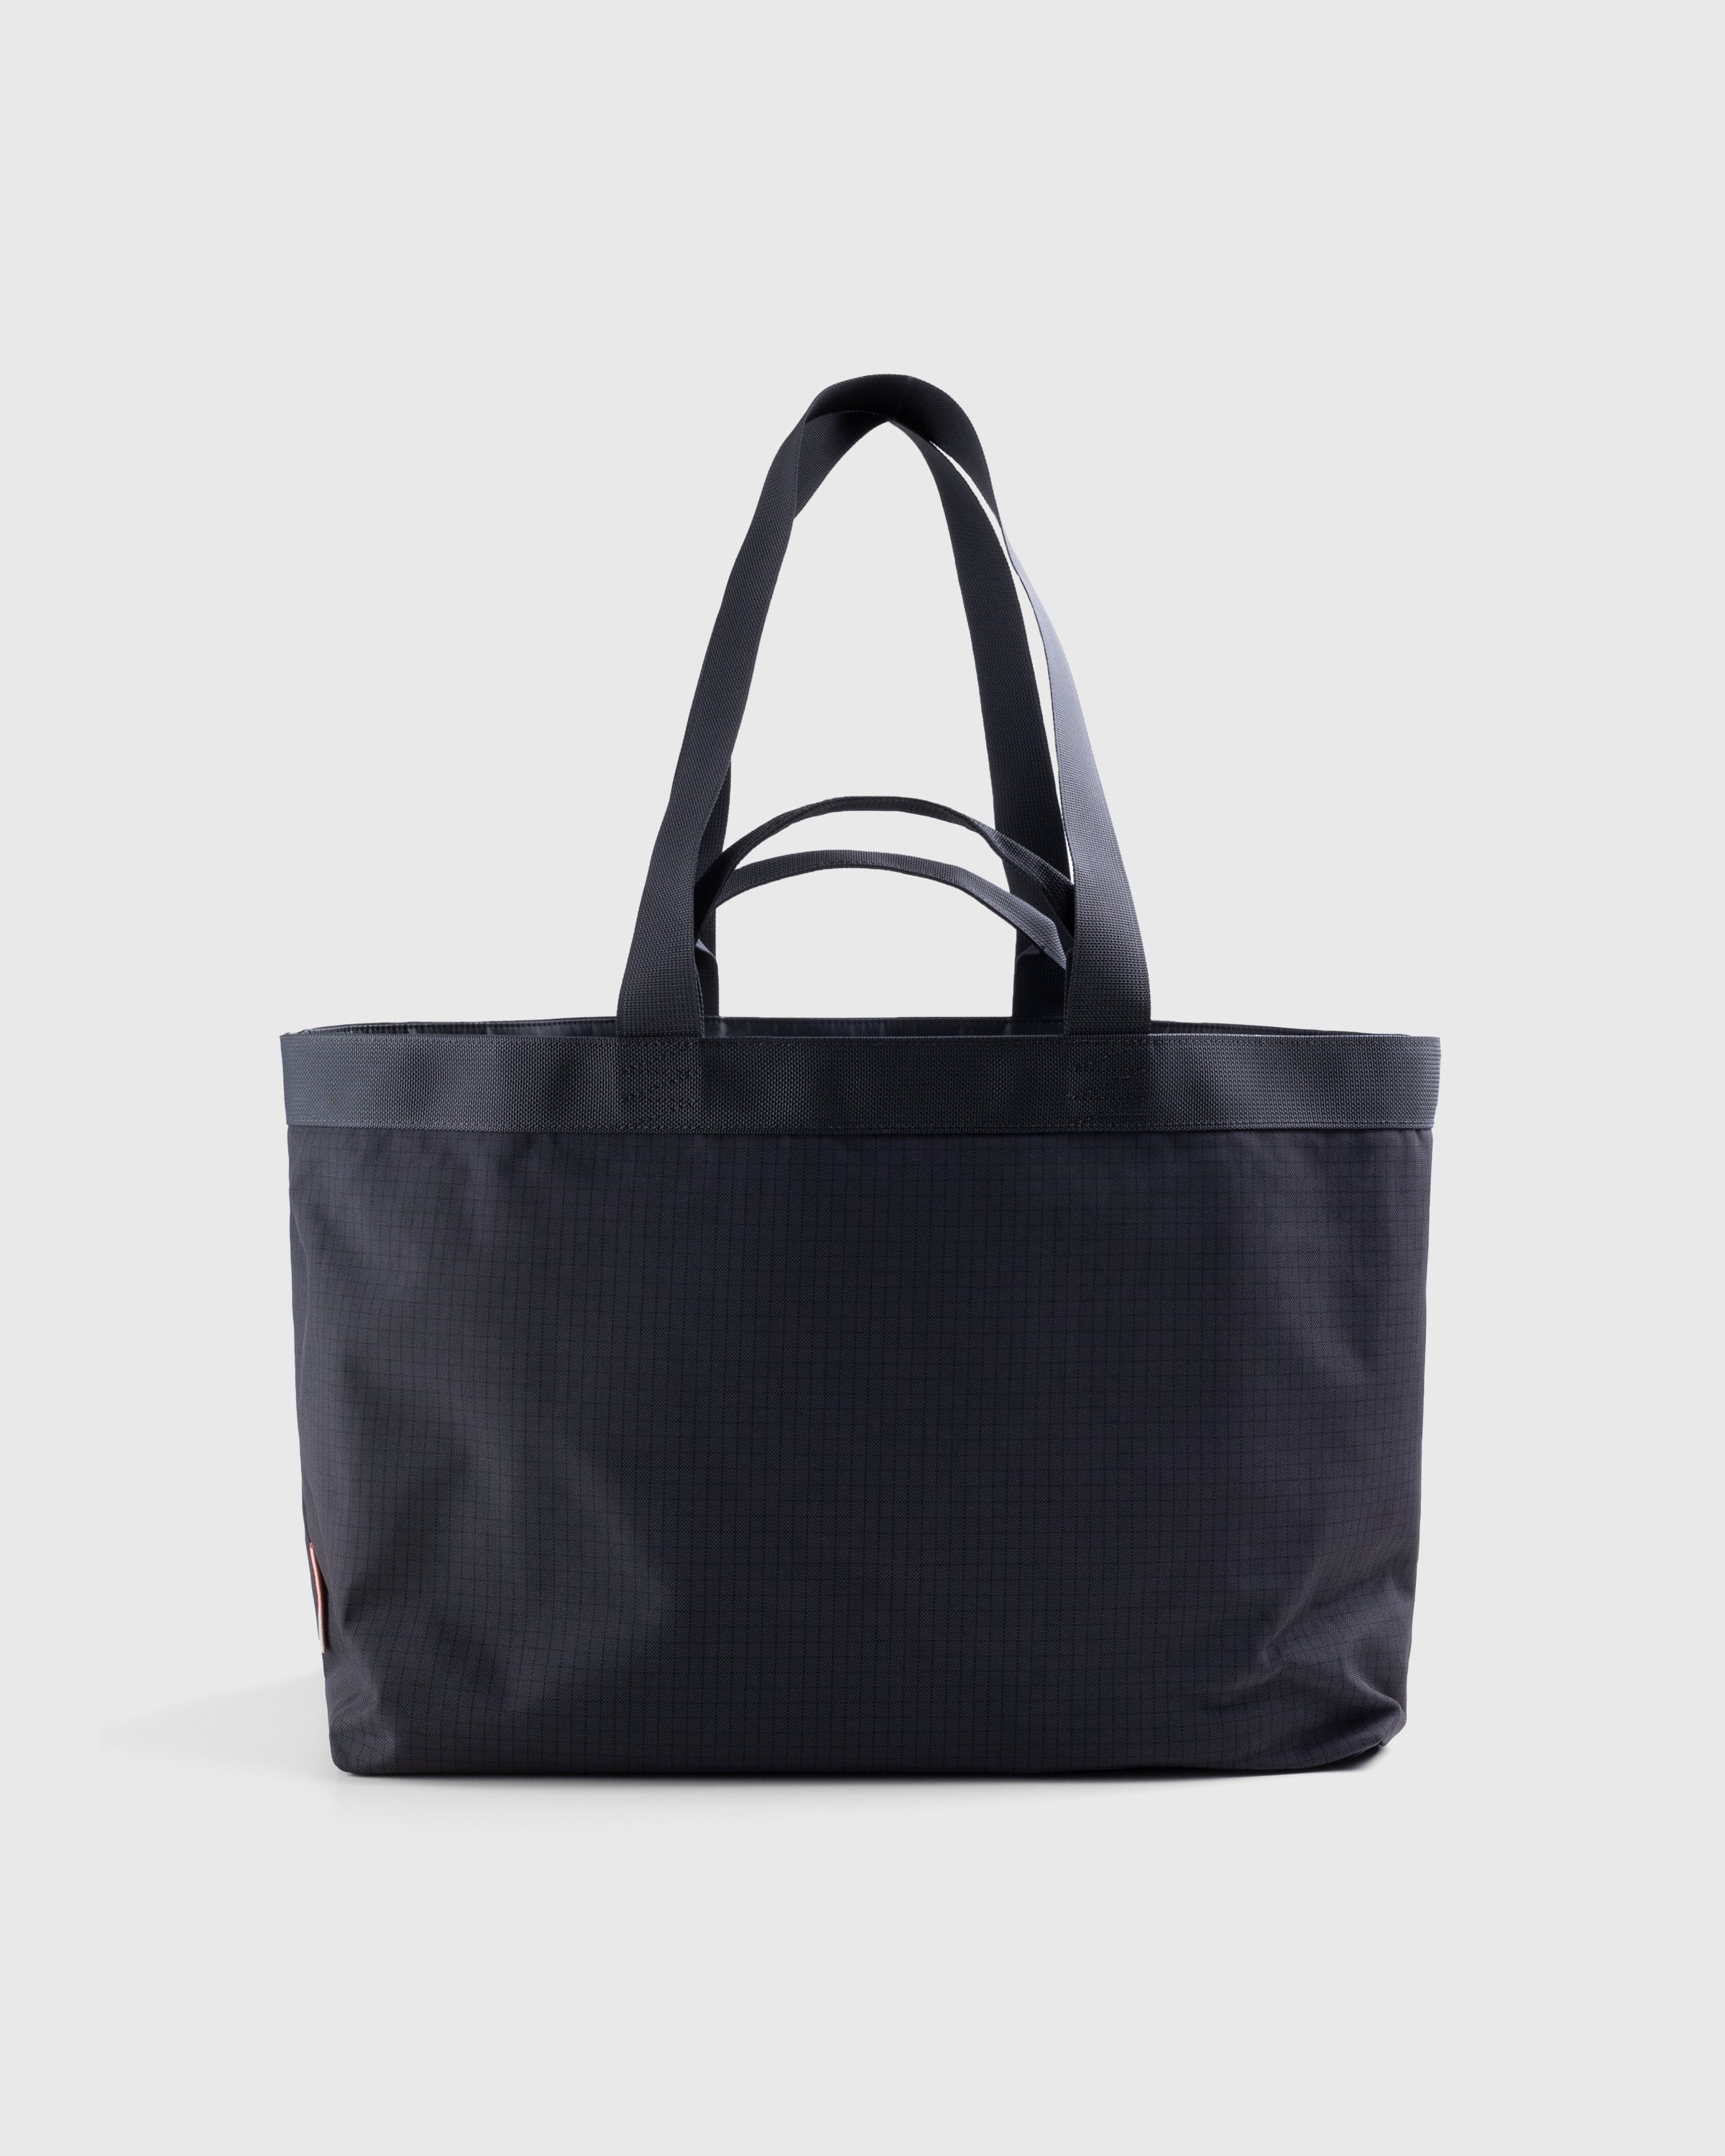 Acne Studios - Nylon Tote Bag Black - Accessories - Black - Image 3